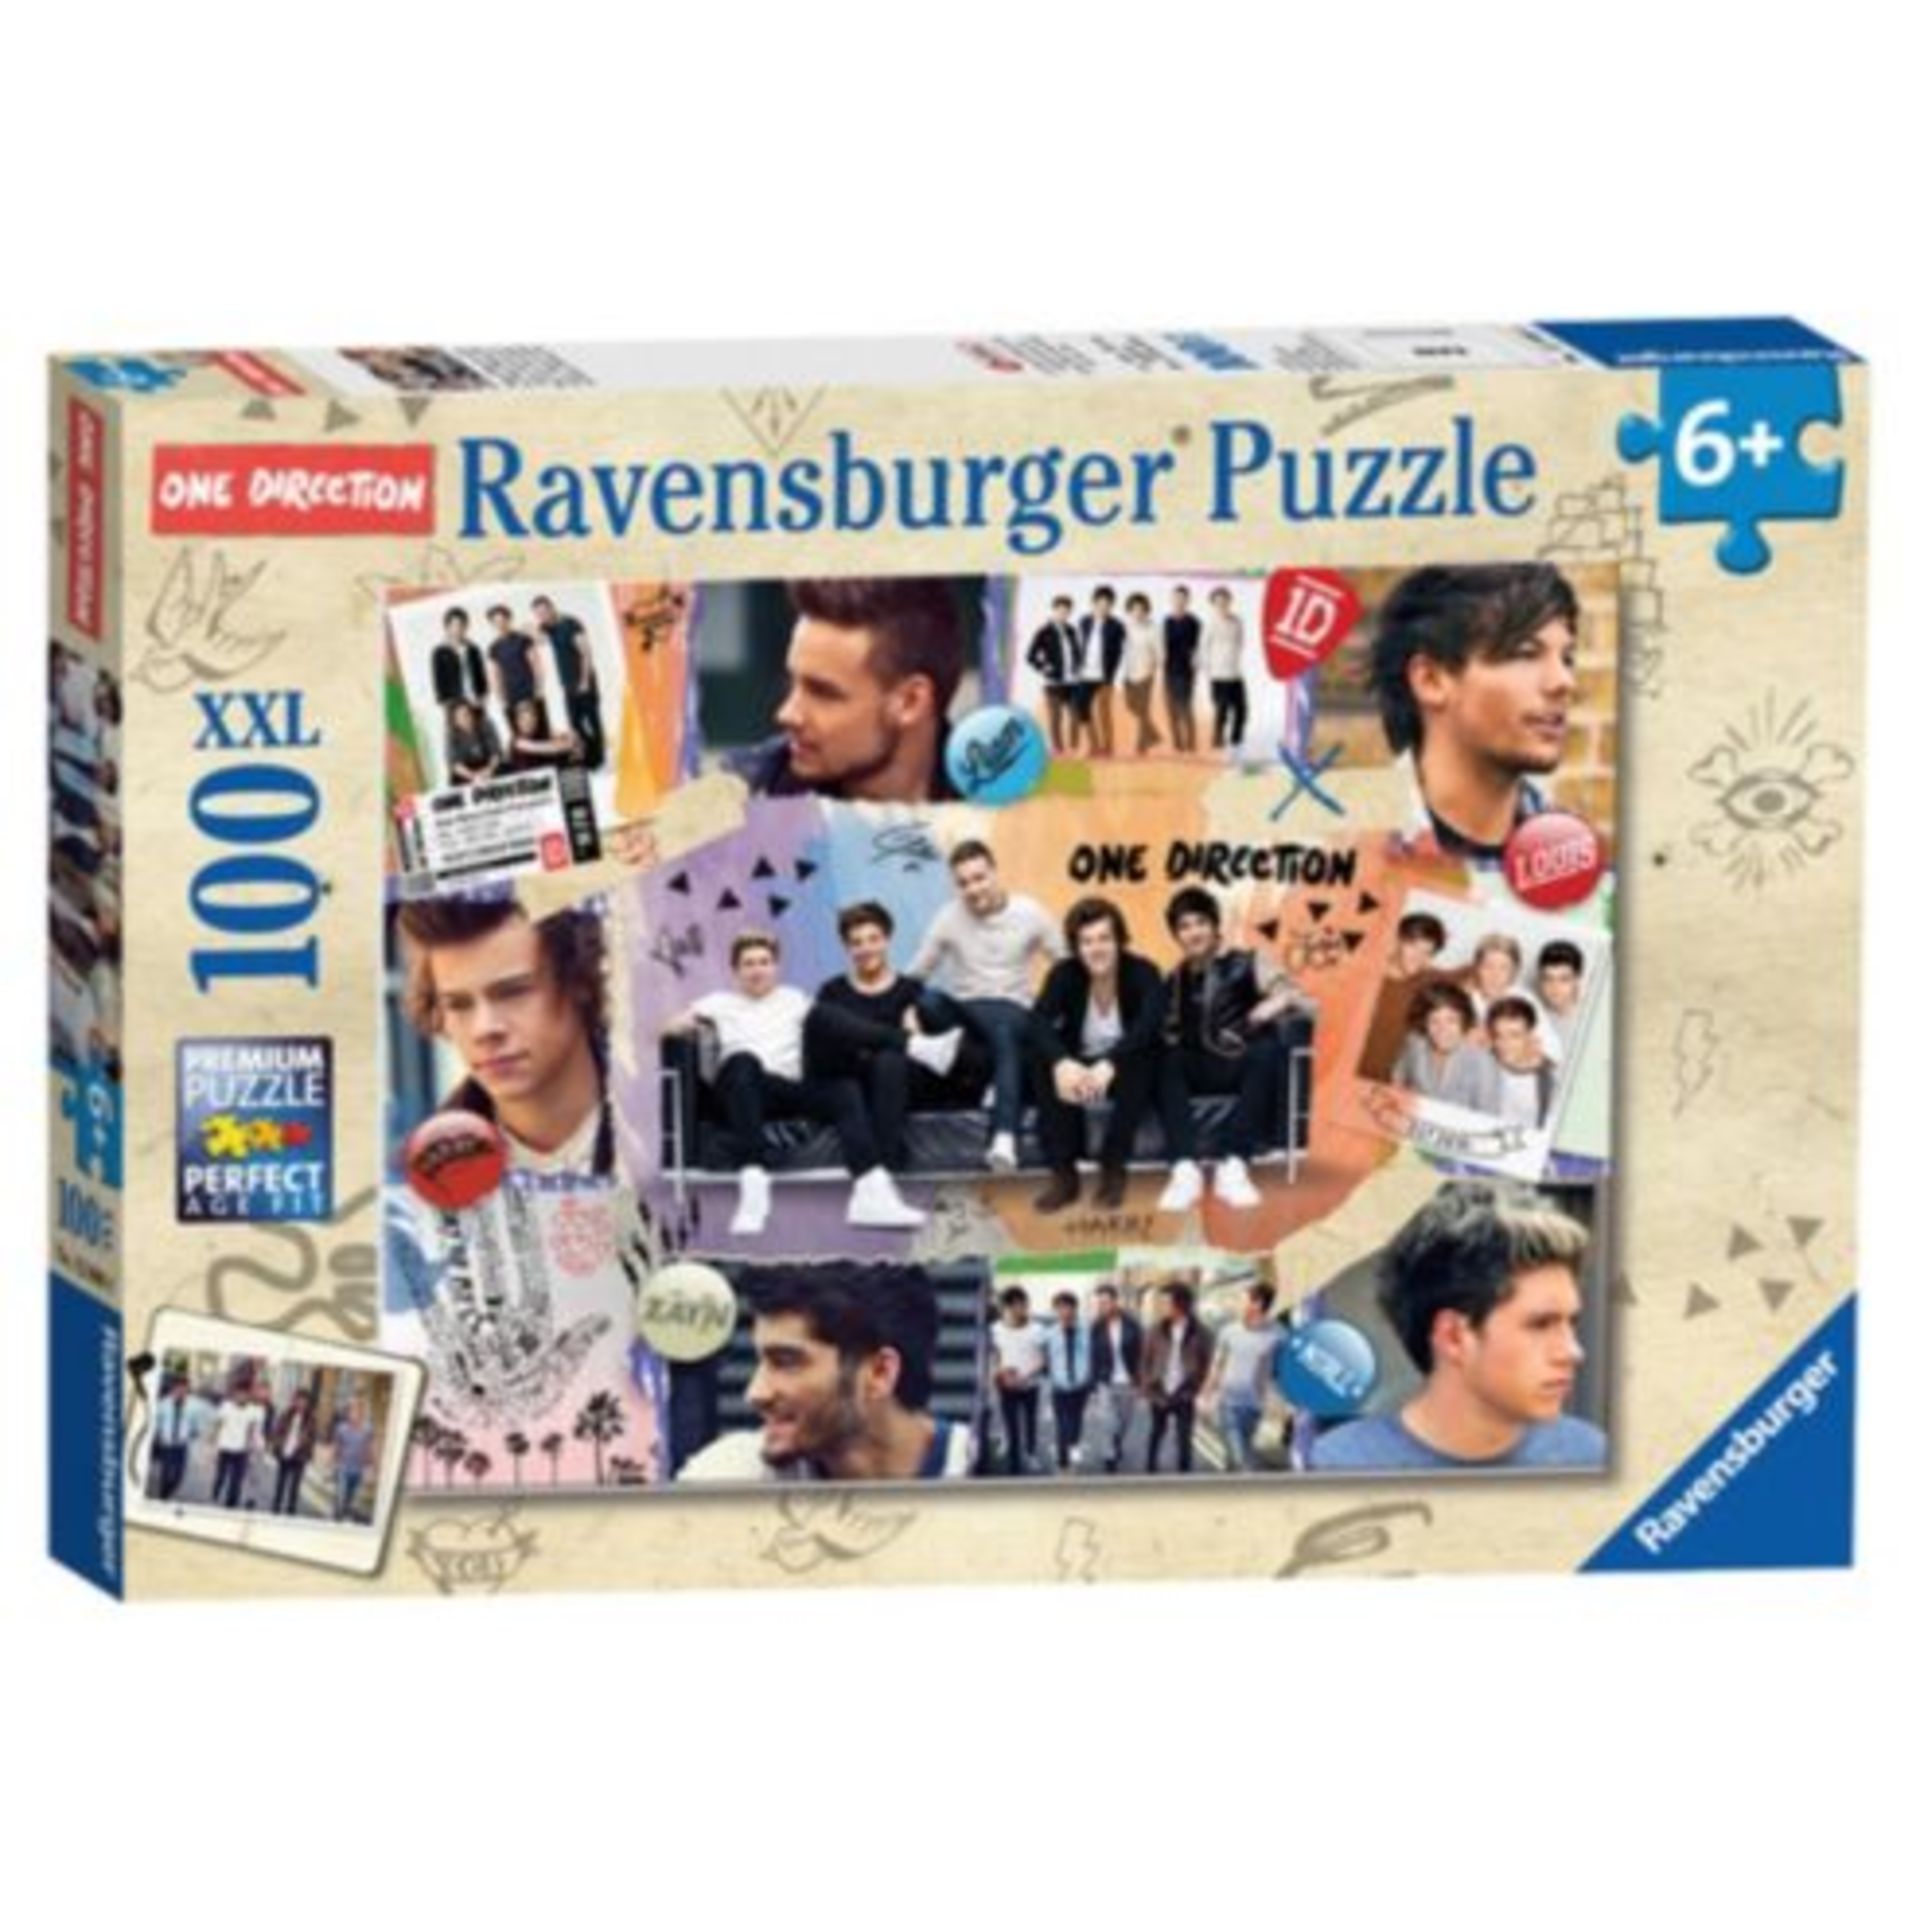 V Ravensburger puzzle XXL 100 - One Direction.